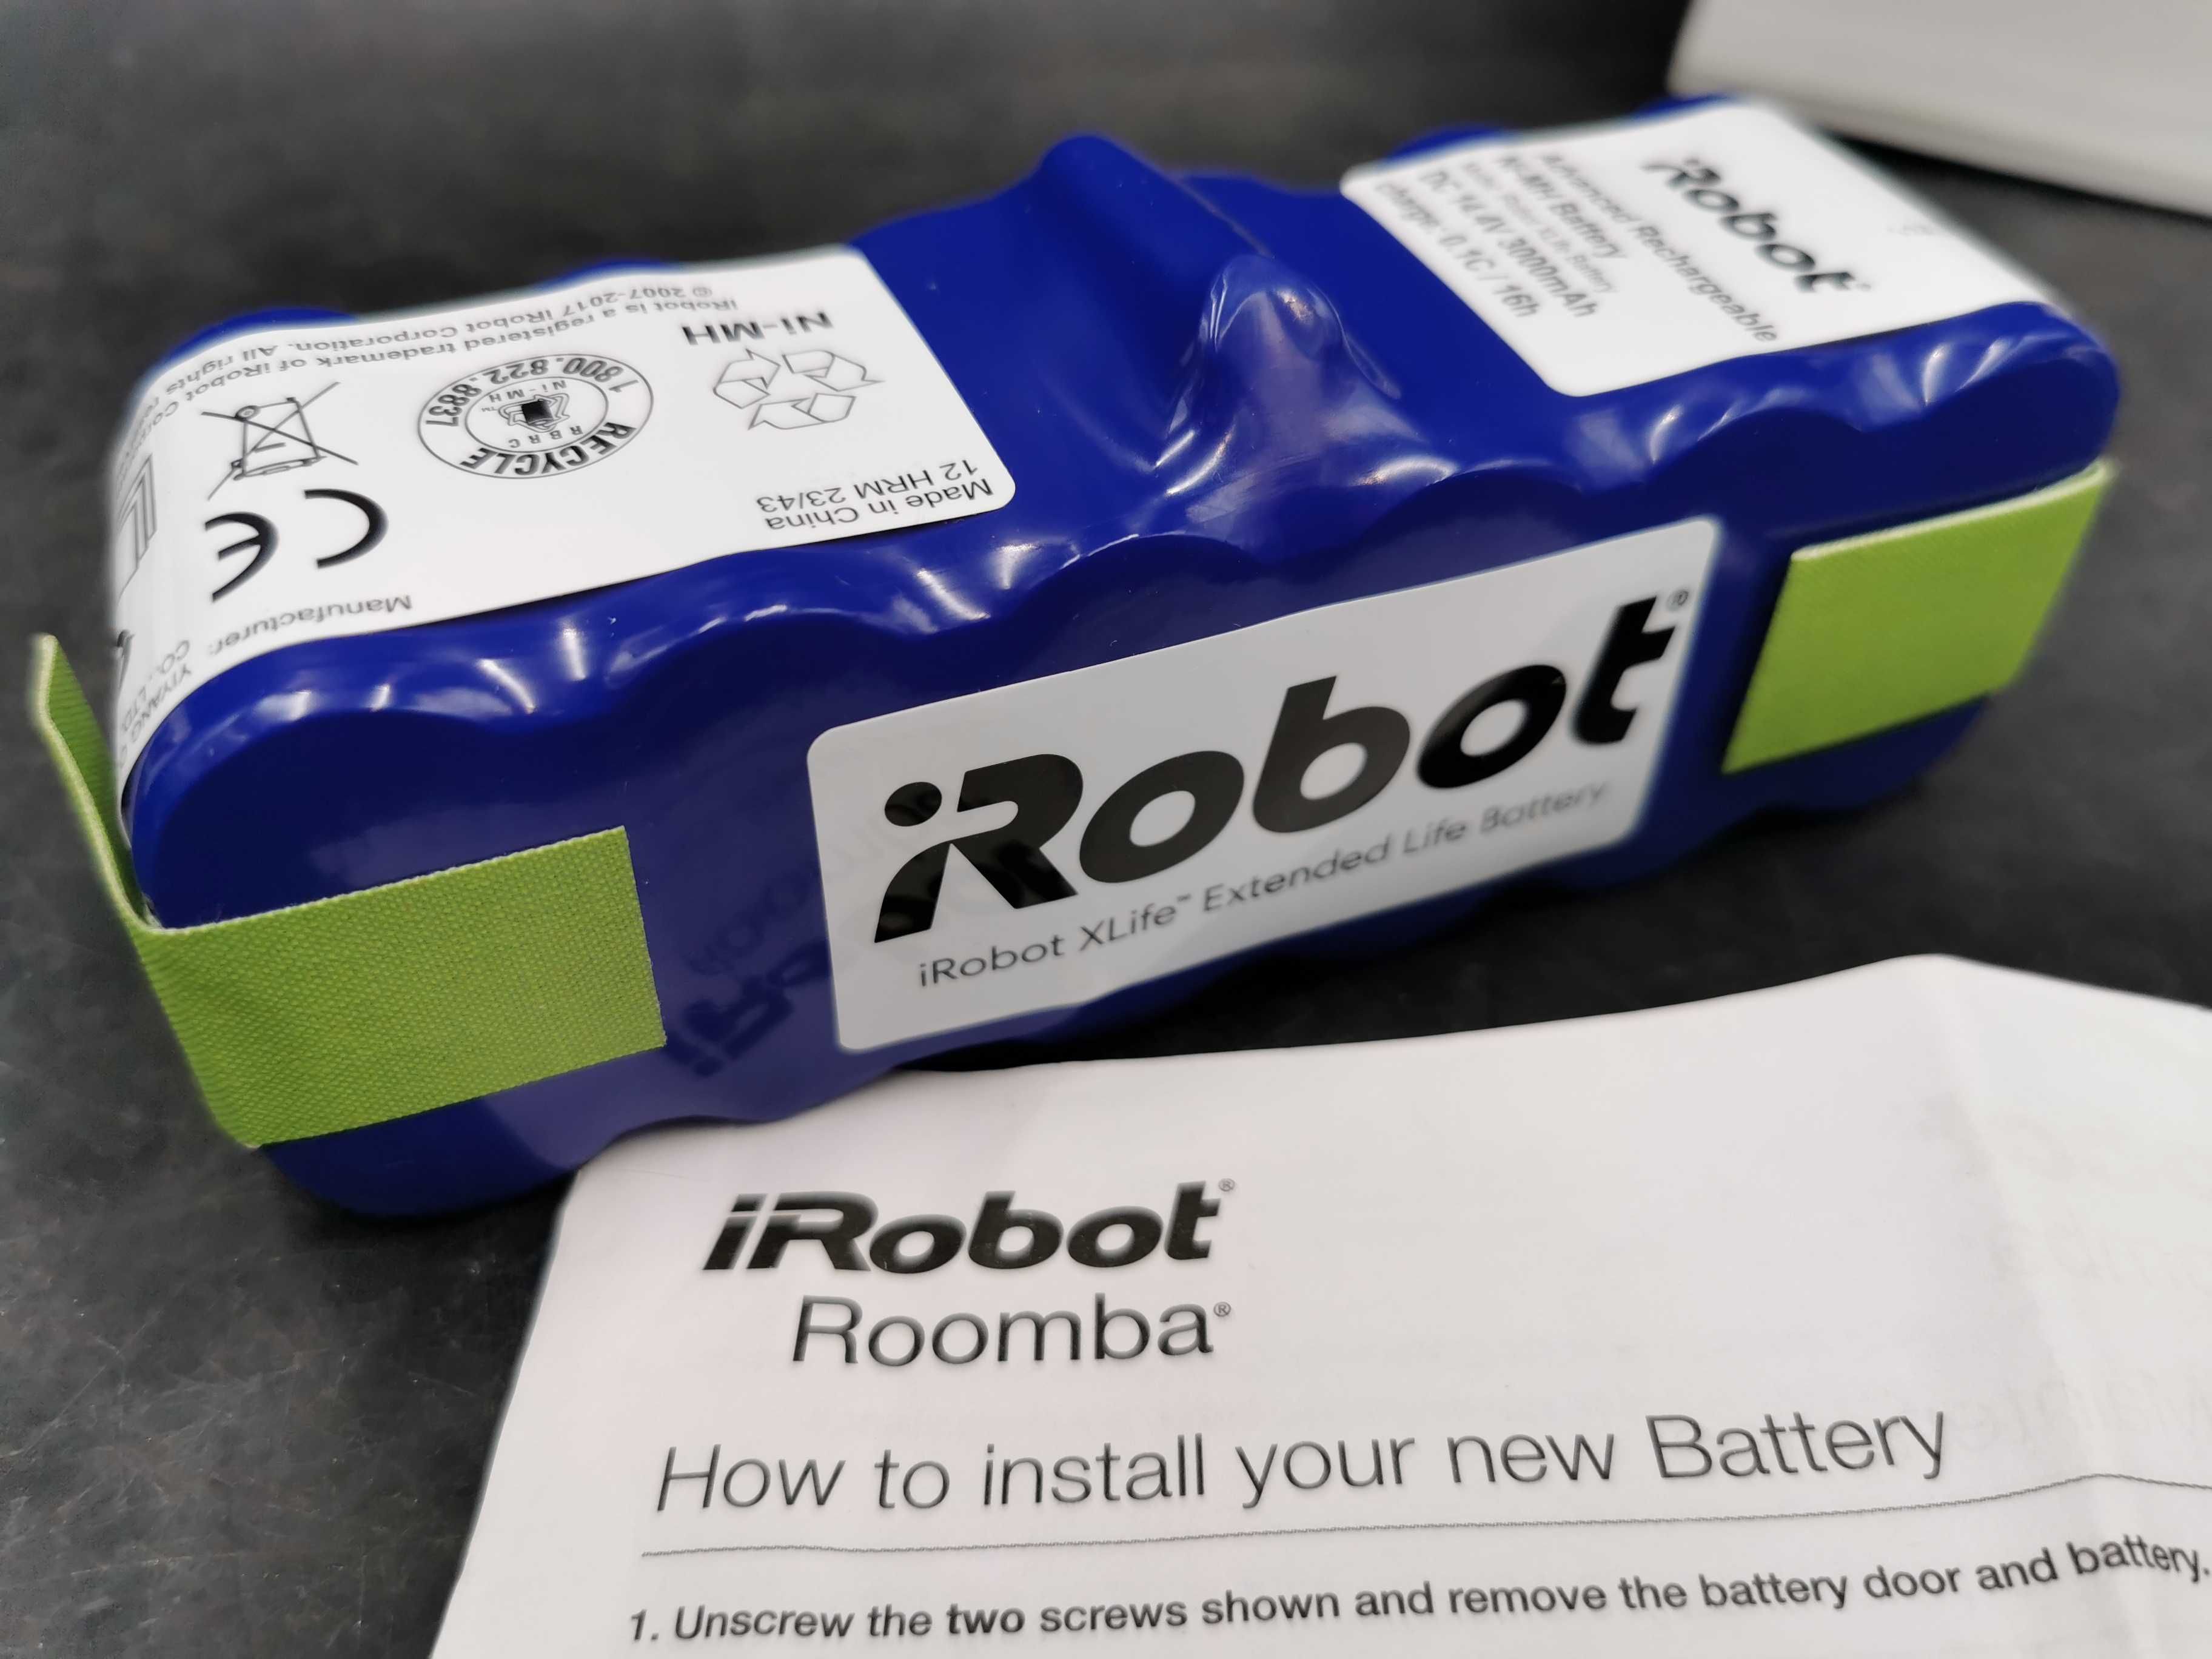 iRobot XLife Oryginalny Akumulator Rozszerzony 3000mAh do Roomba